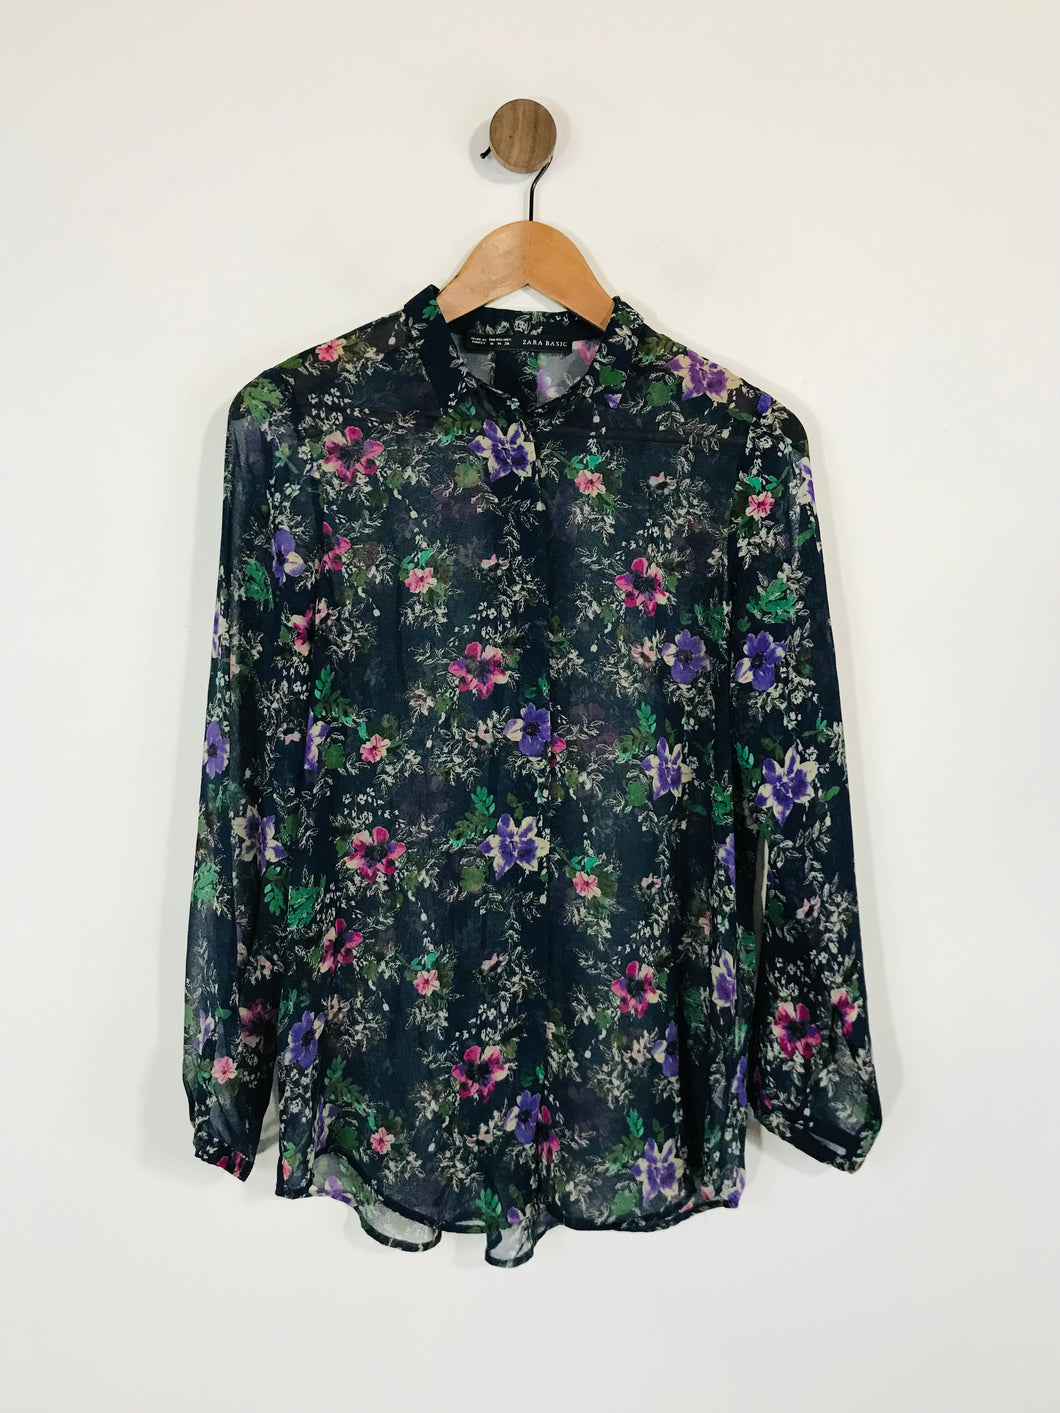 Zara Women's Floral Long Sleeve Blouse | M UK10-12 | Multicoloured